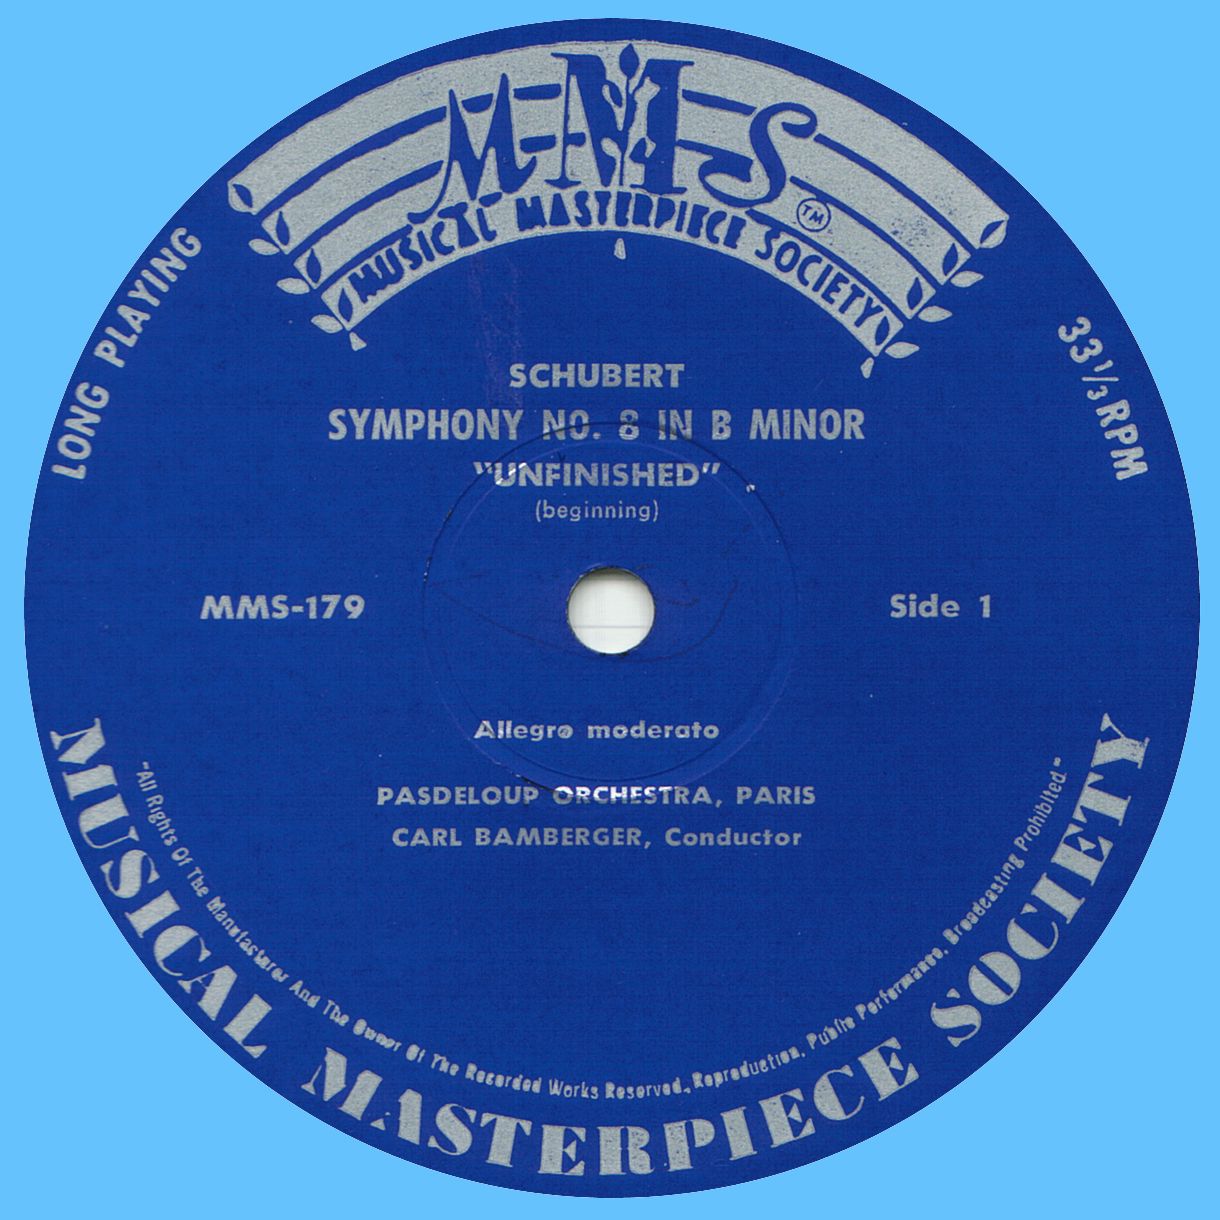 Musical Masterpiece Society» MMS 179, Étiquette du disque recto